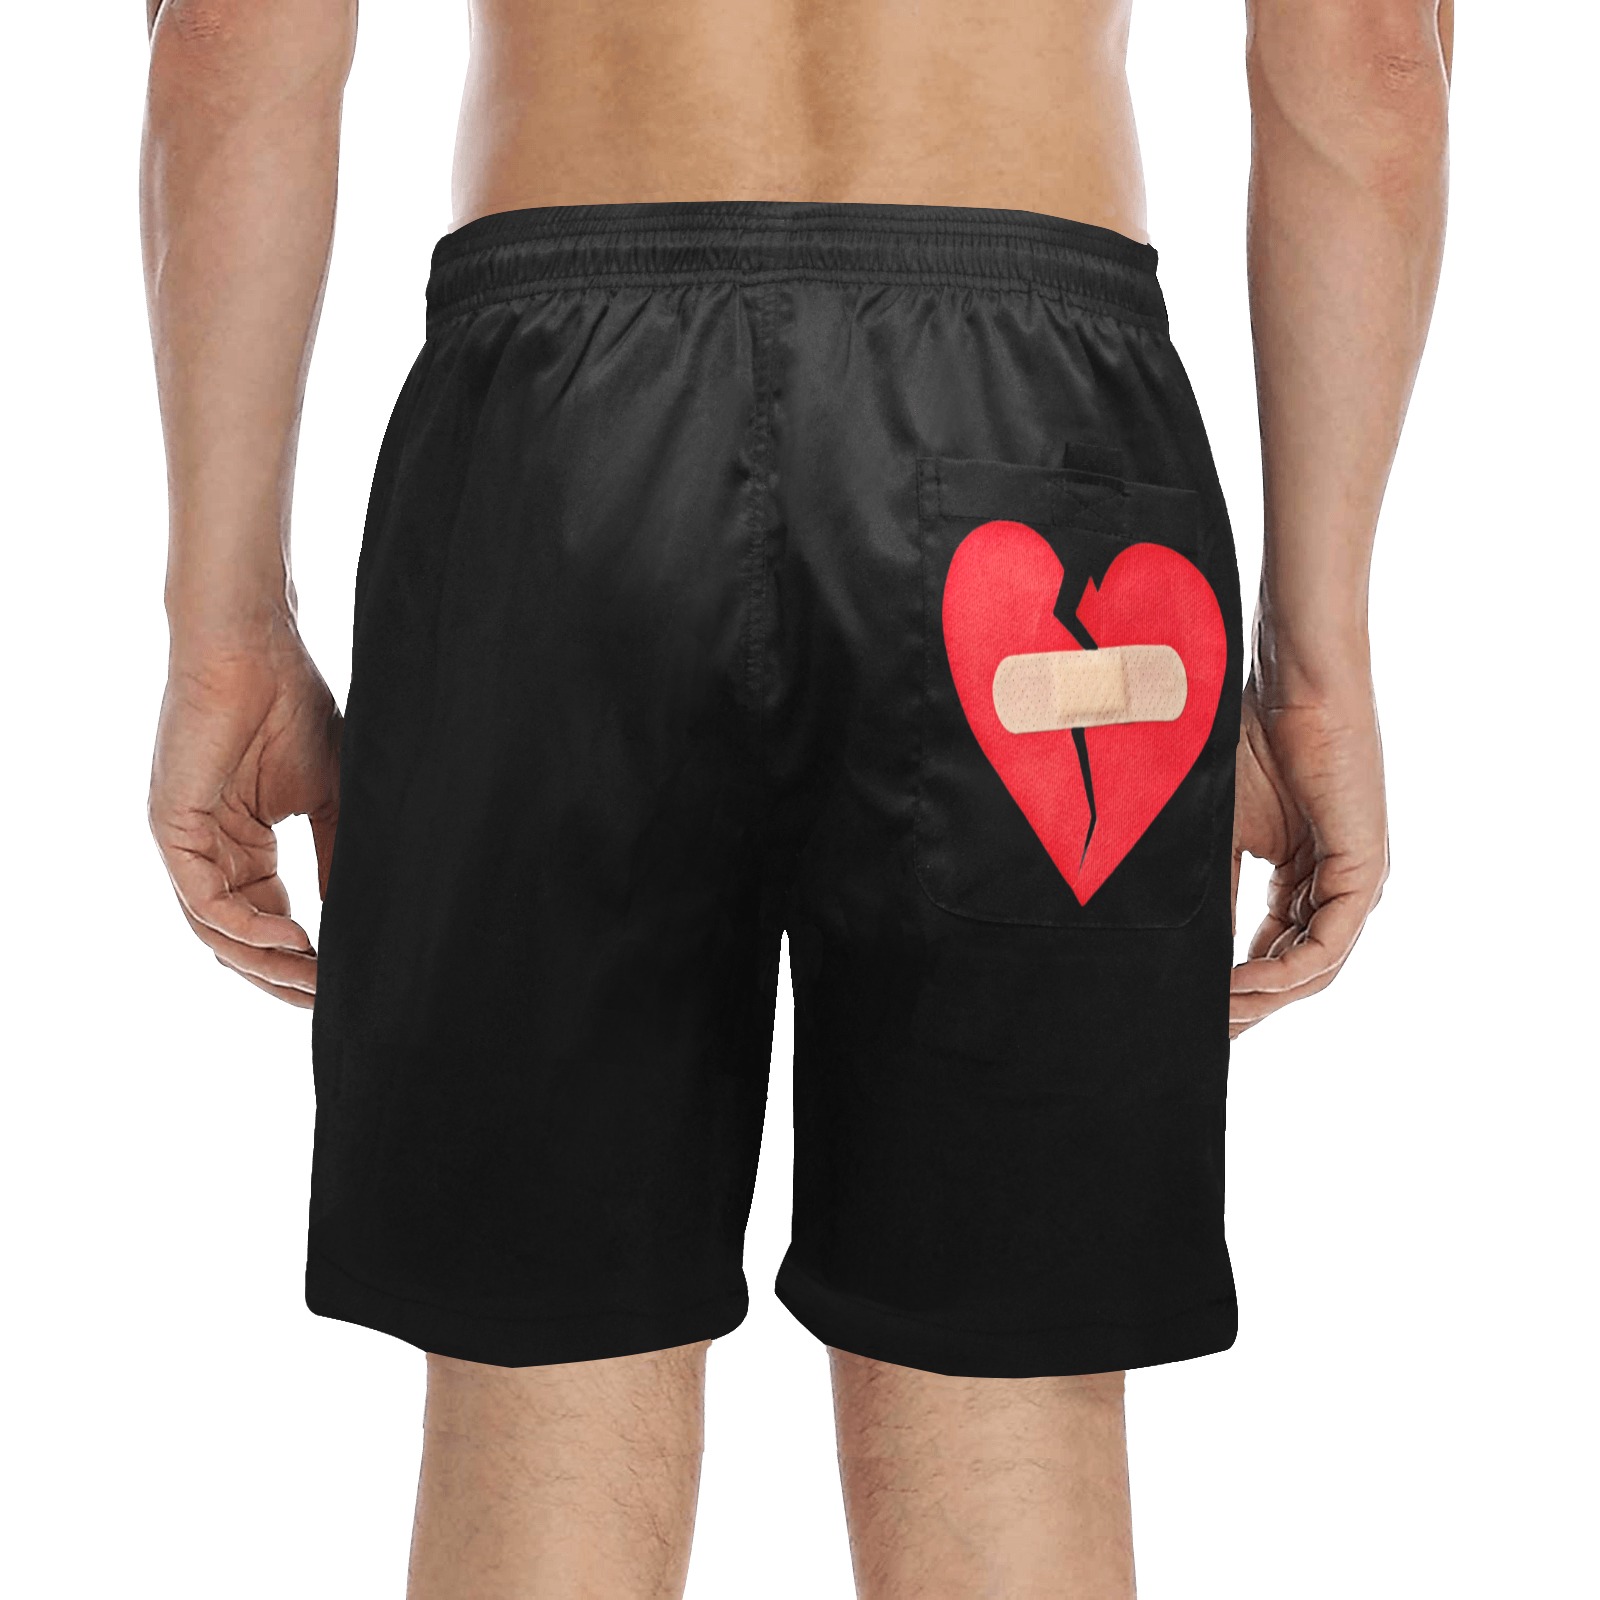 Heartbreak Shorts Men's Mid-Length Beach Shorts (Model L51)